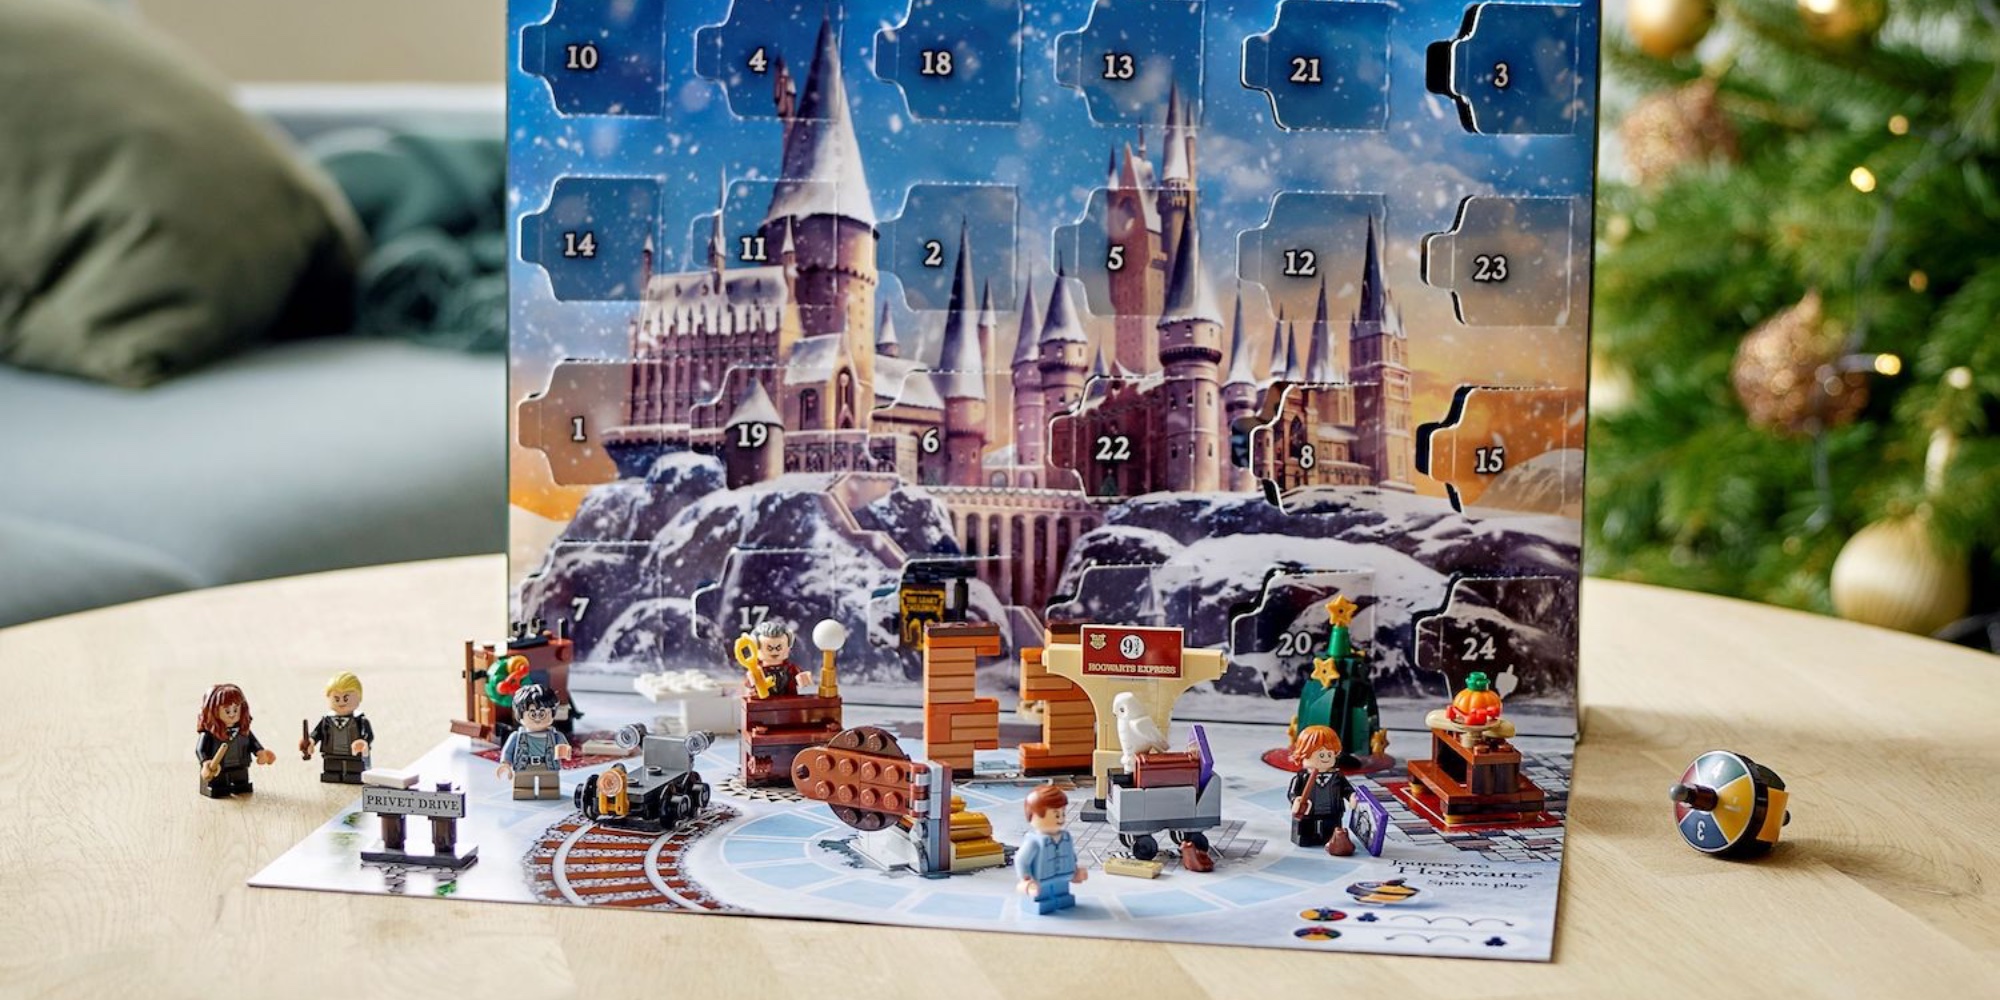 LEGO Harry Potter Advent Calendar arrives ahead of holidays 9to5Toys